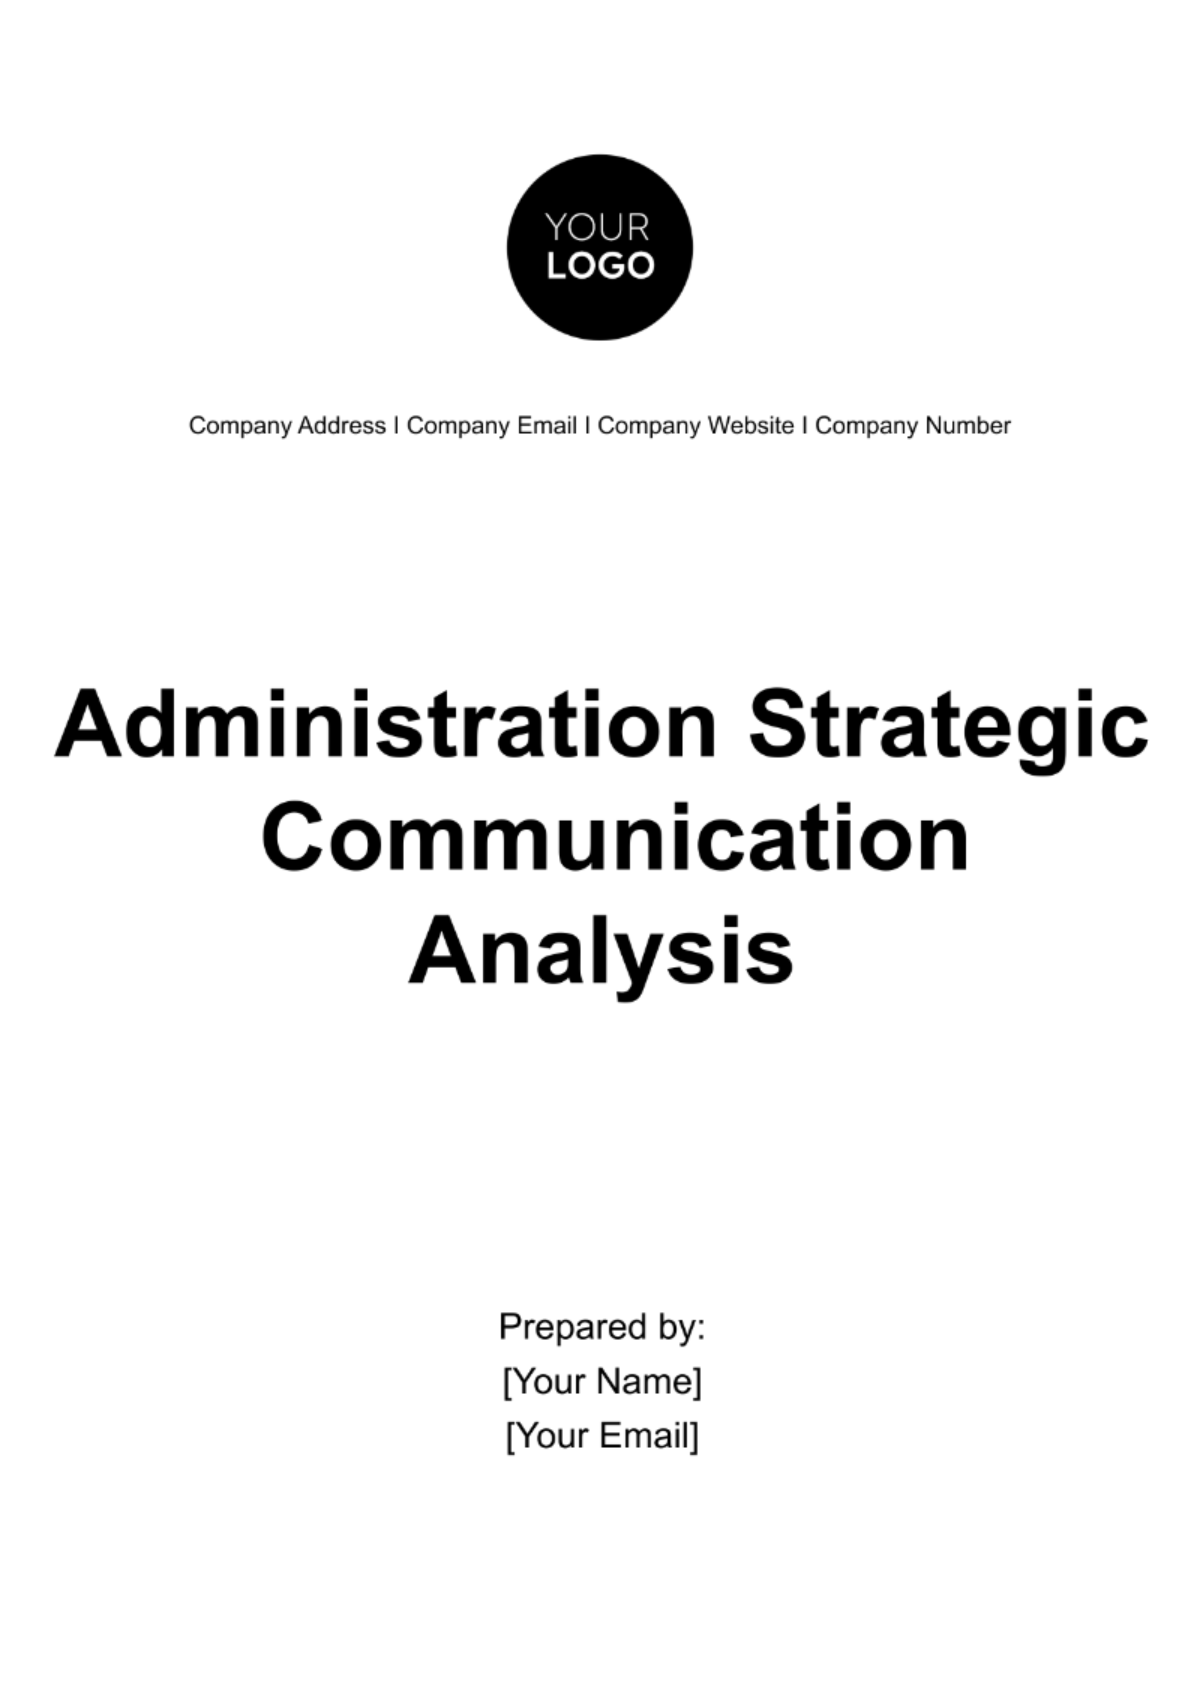 Free Administration Strategic Communication Analysis Template